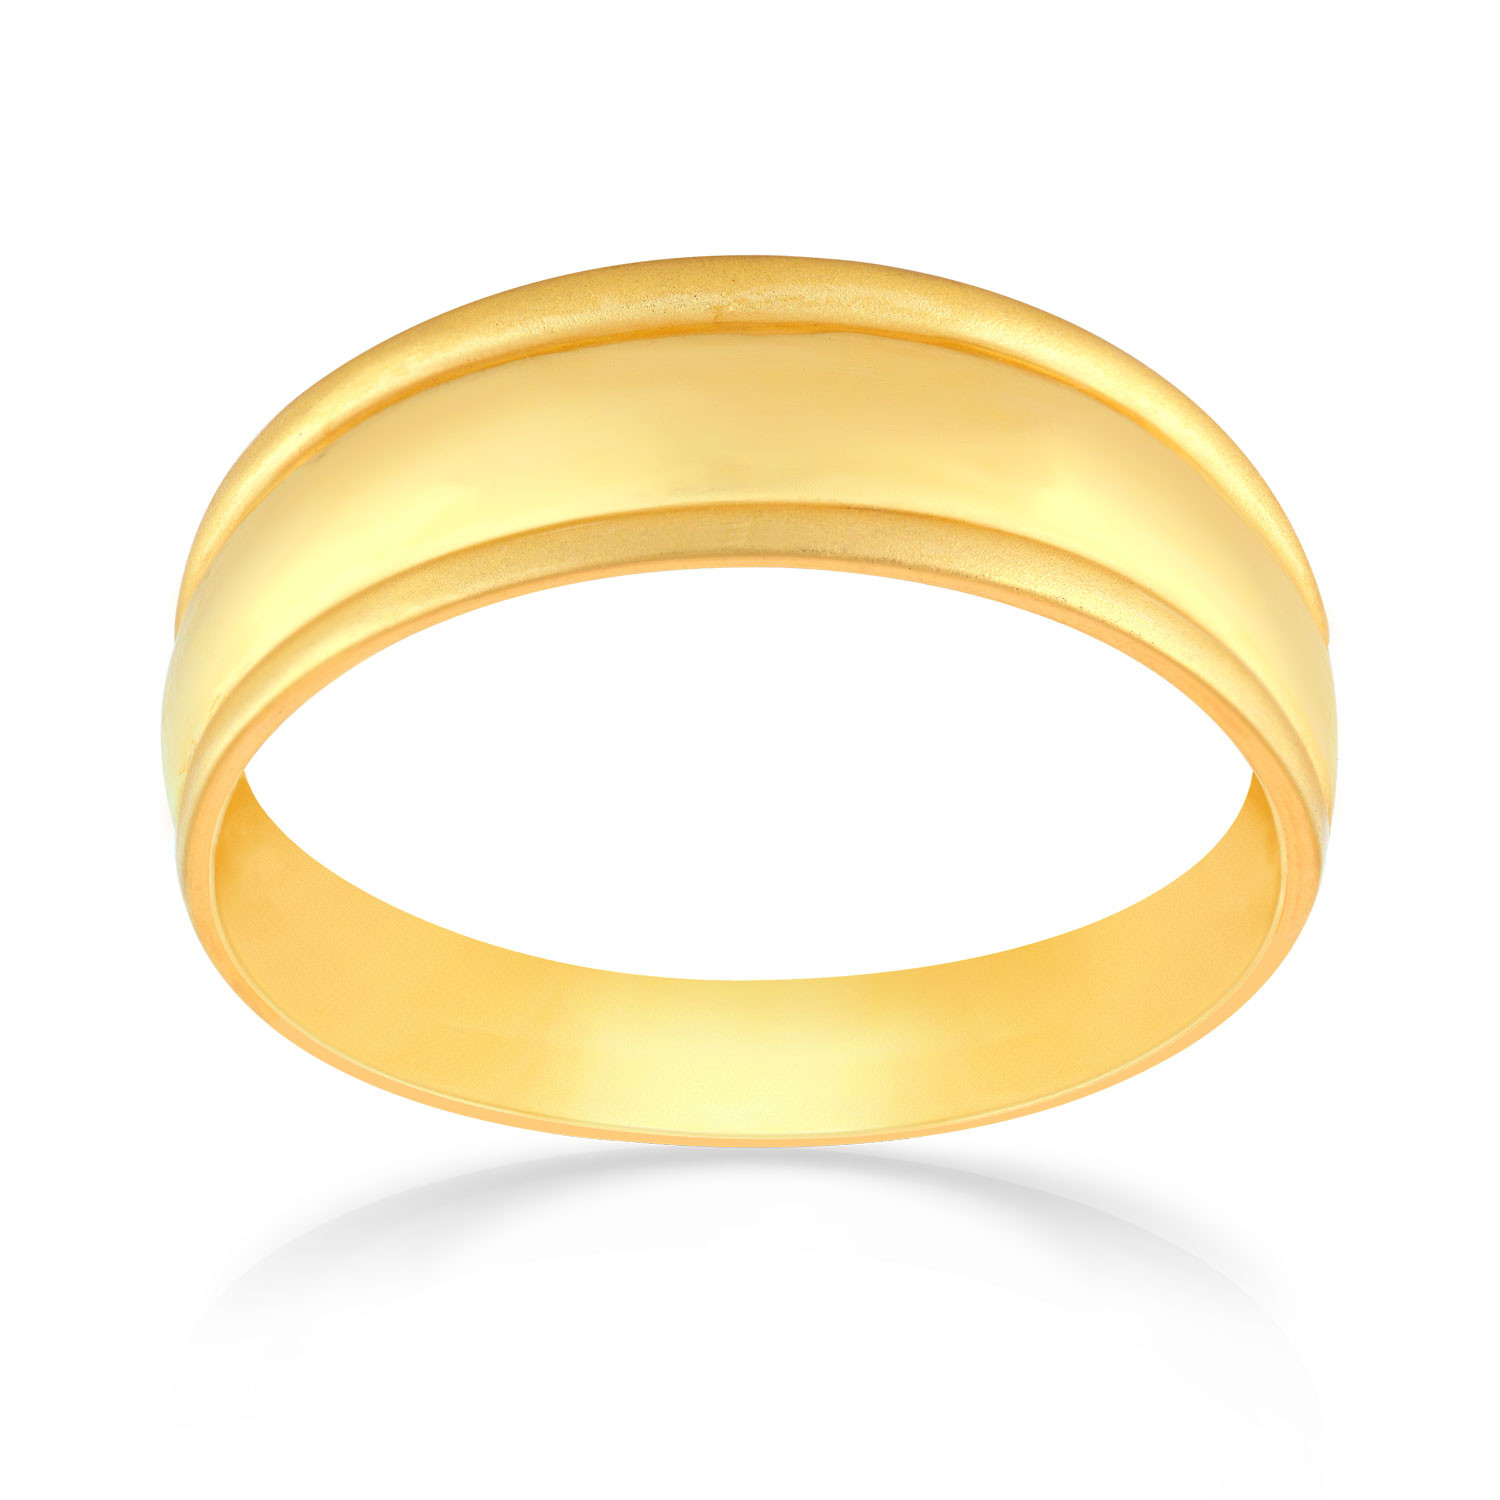 Malabar 22 KT Gold Studded Ring For Men FRNOSKY552